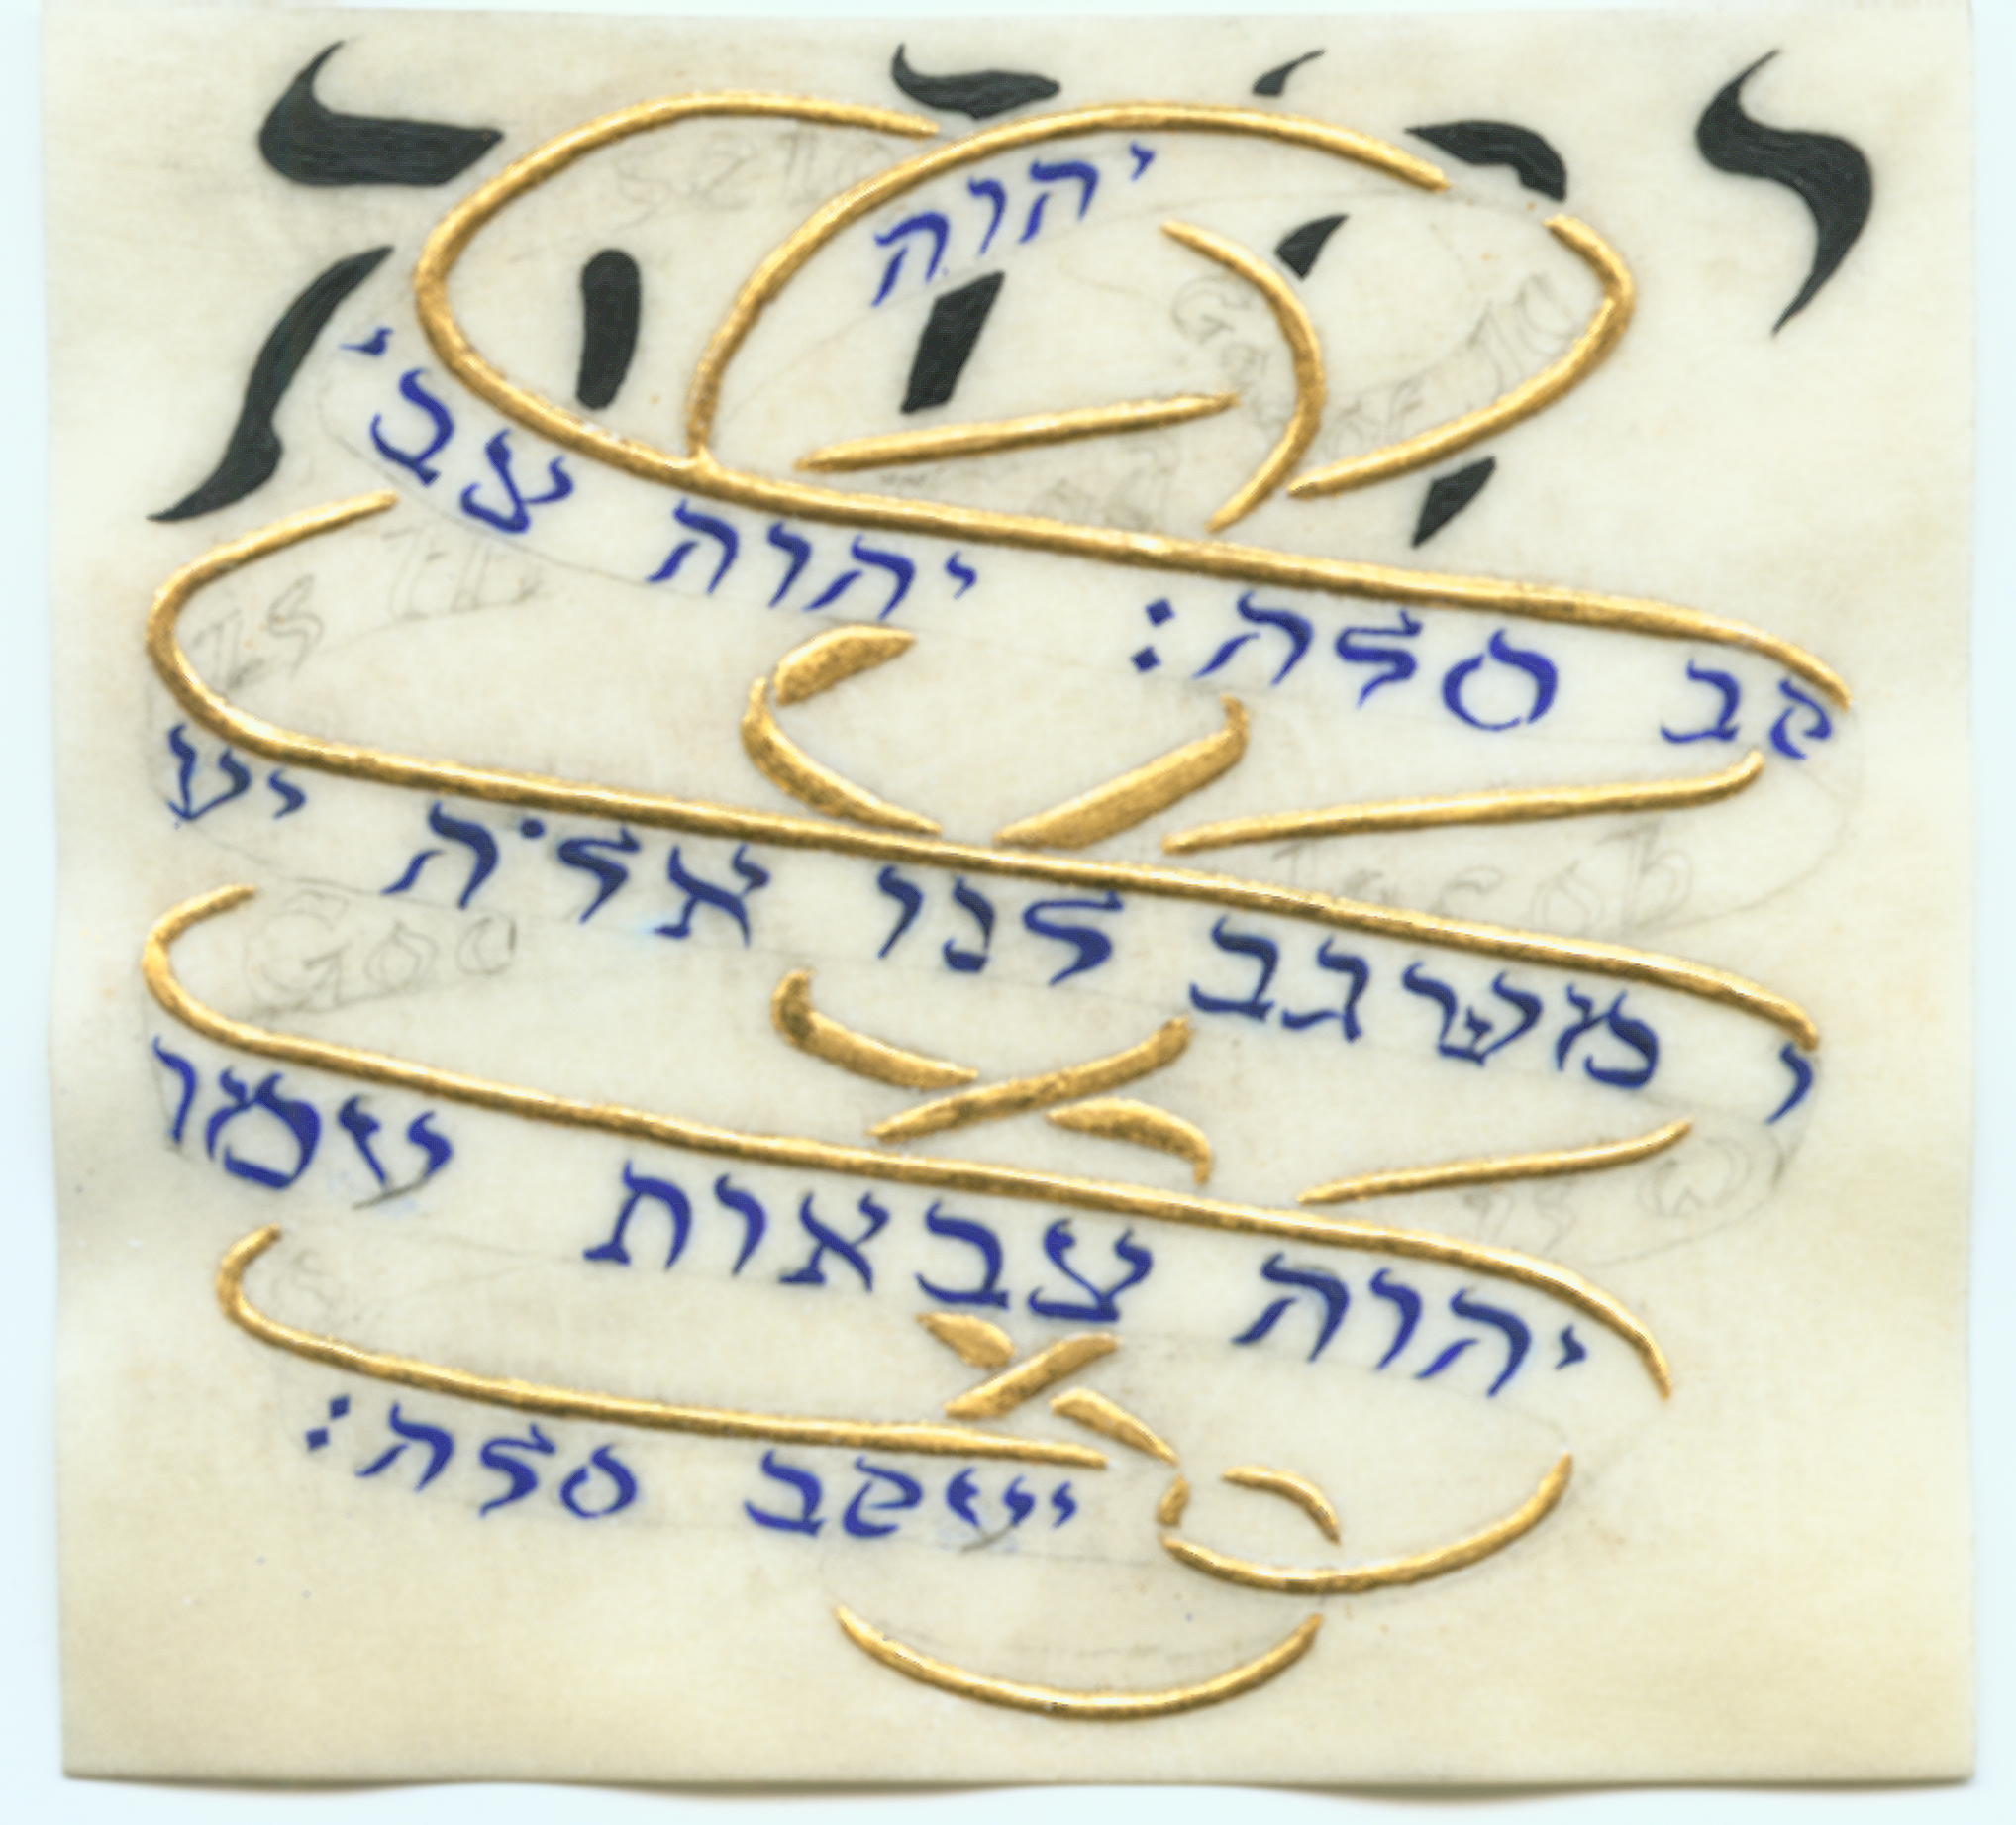 Spektrel Fiyer 3, Hebrew text